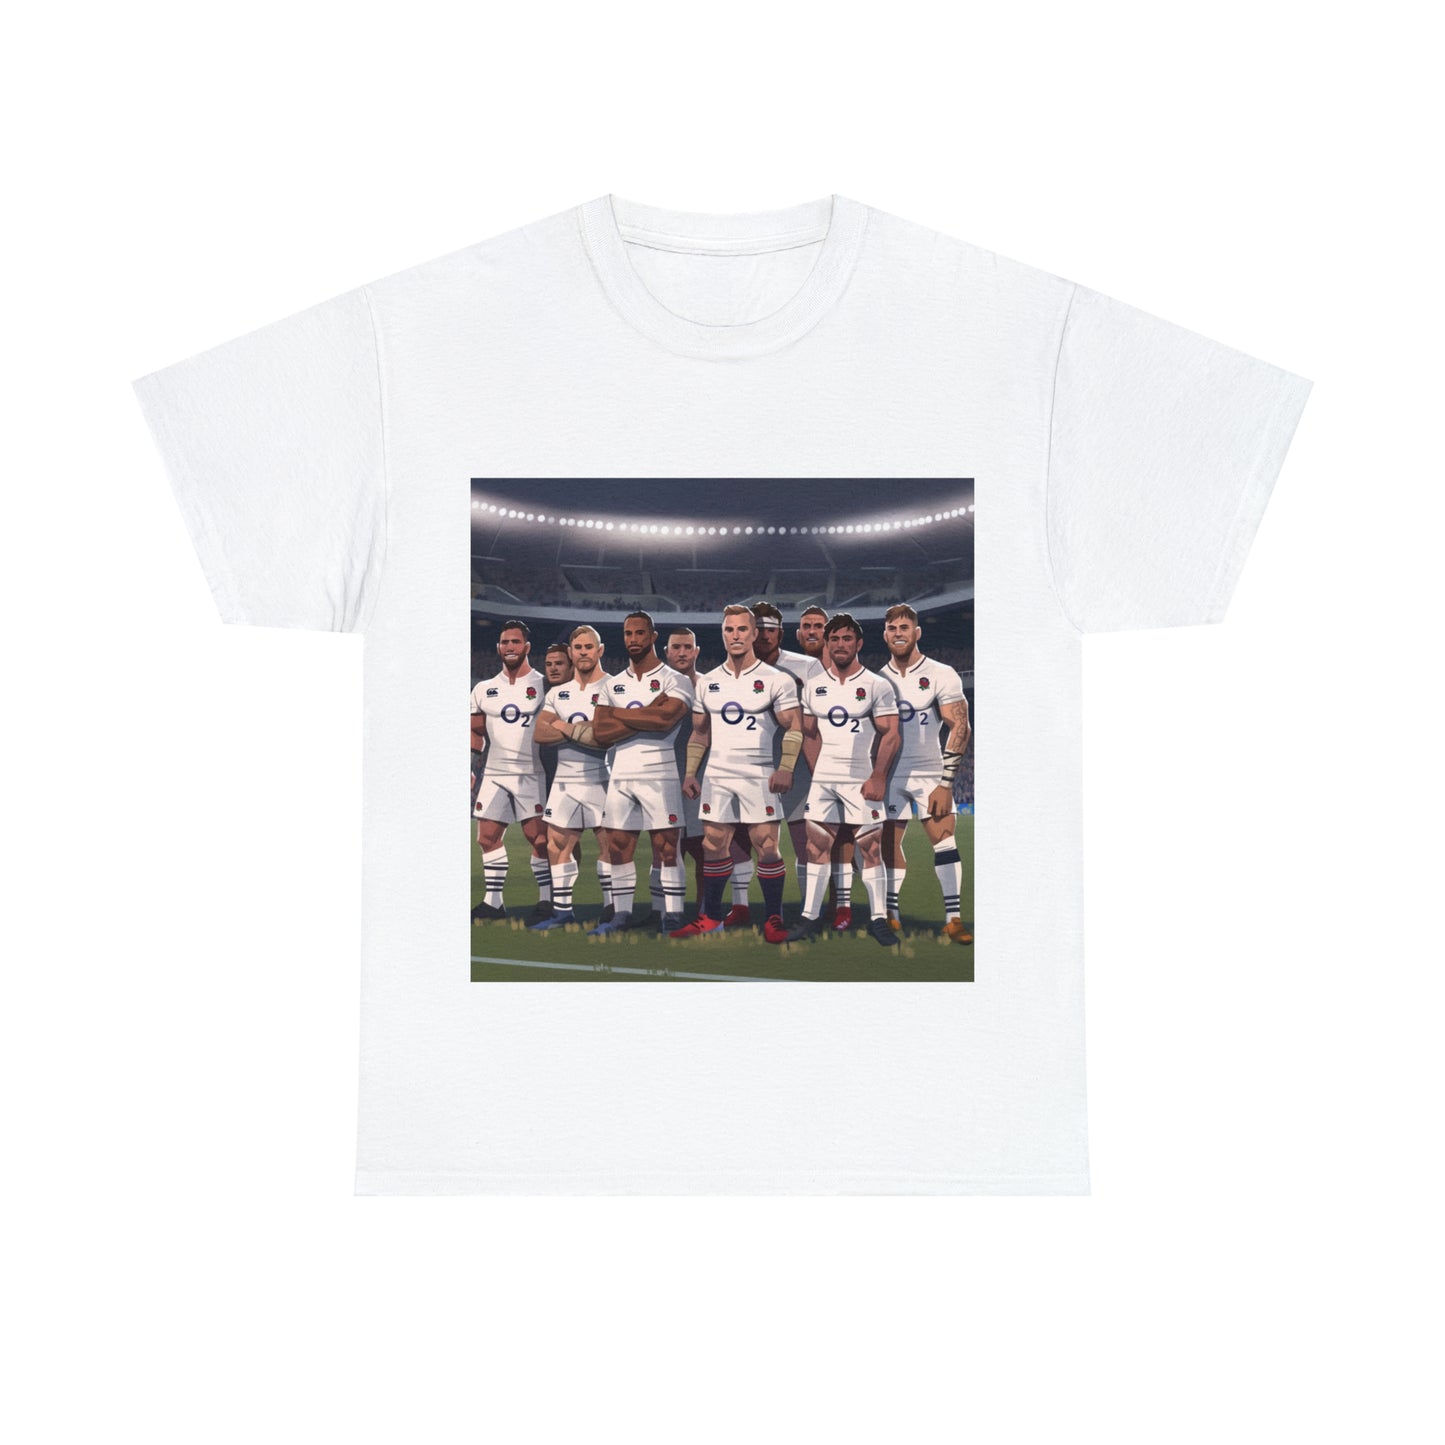 England Ready Team - light shirts